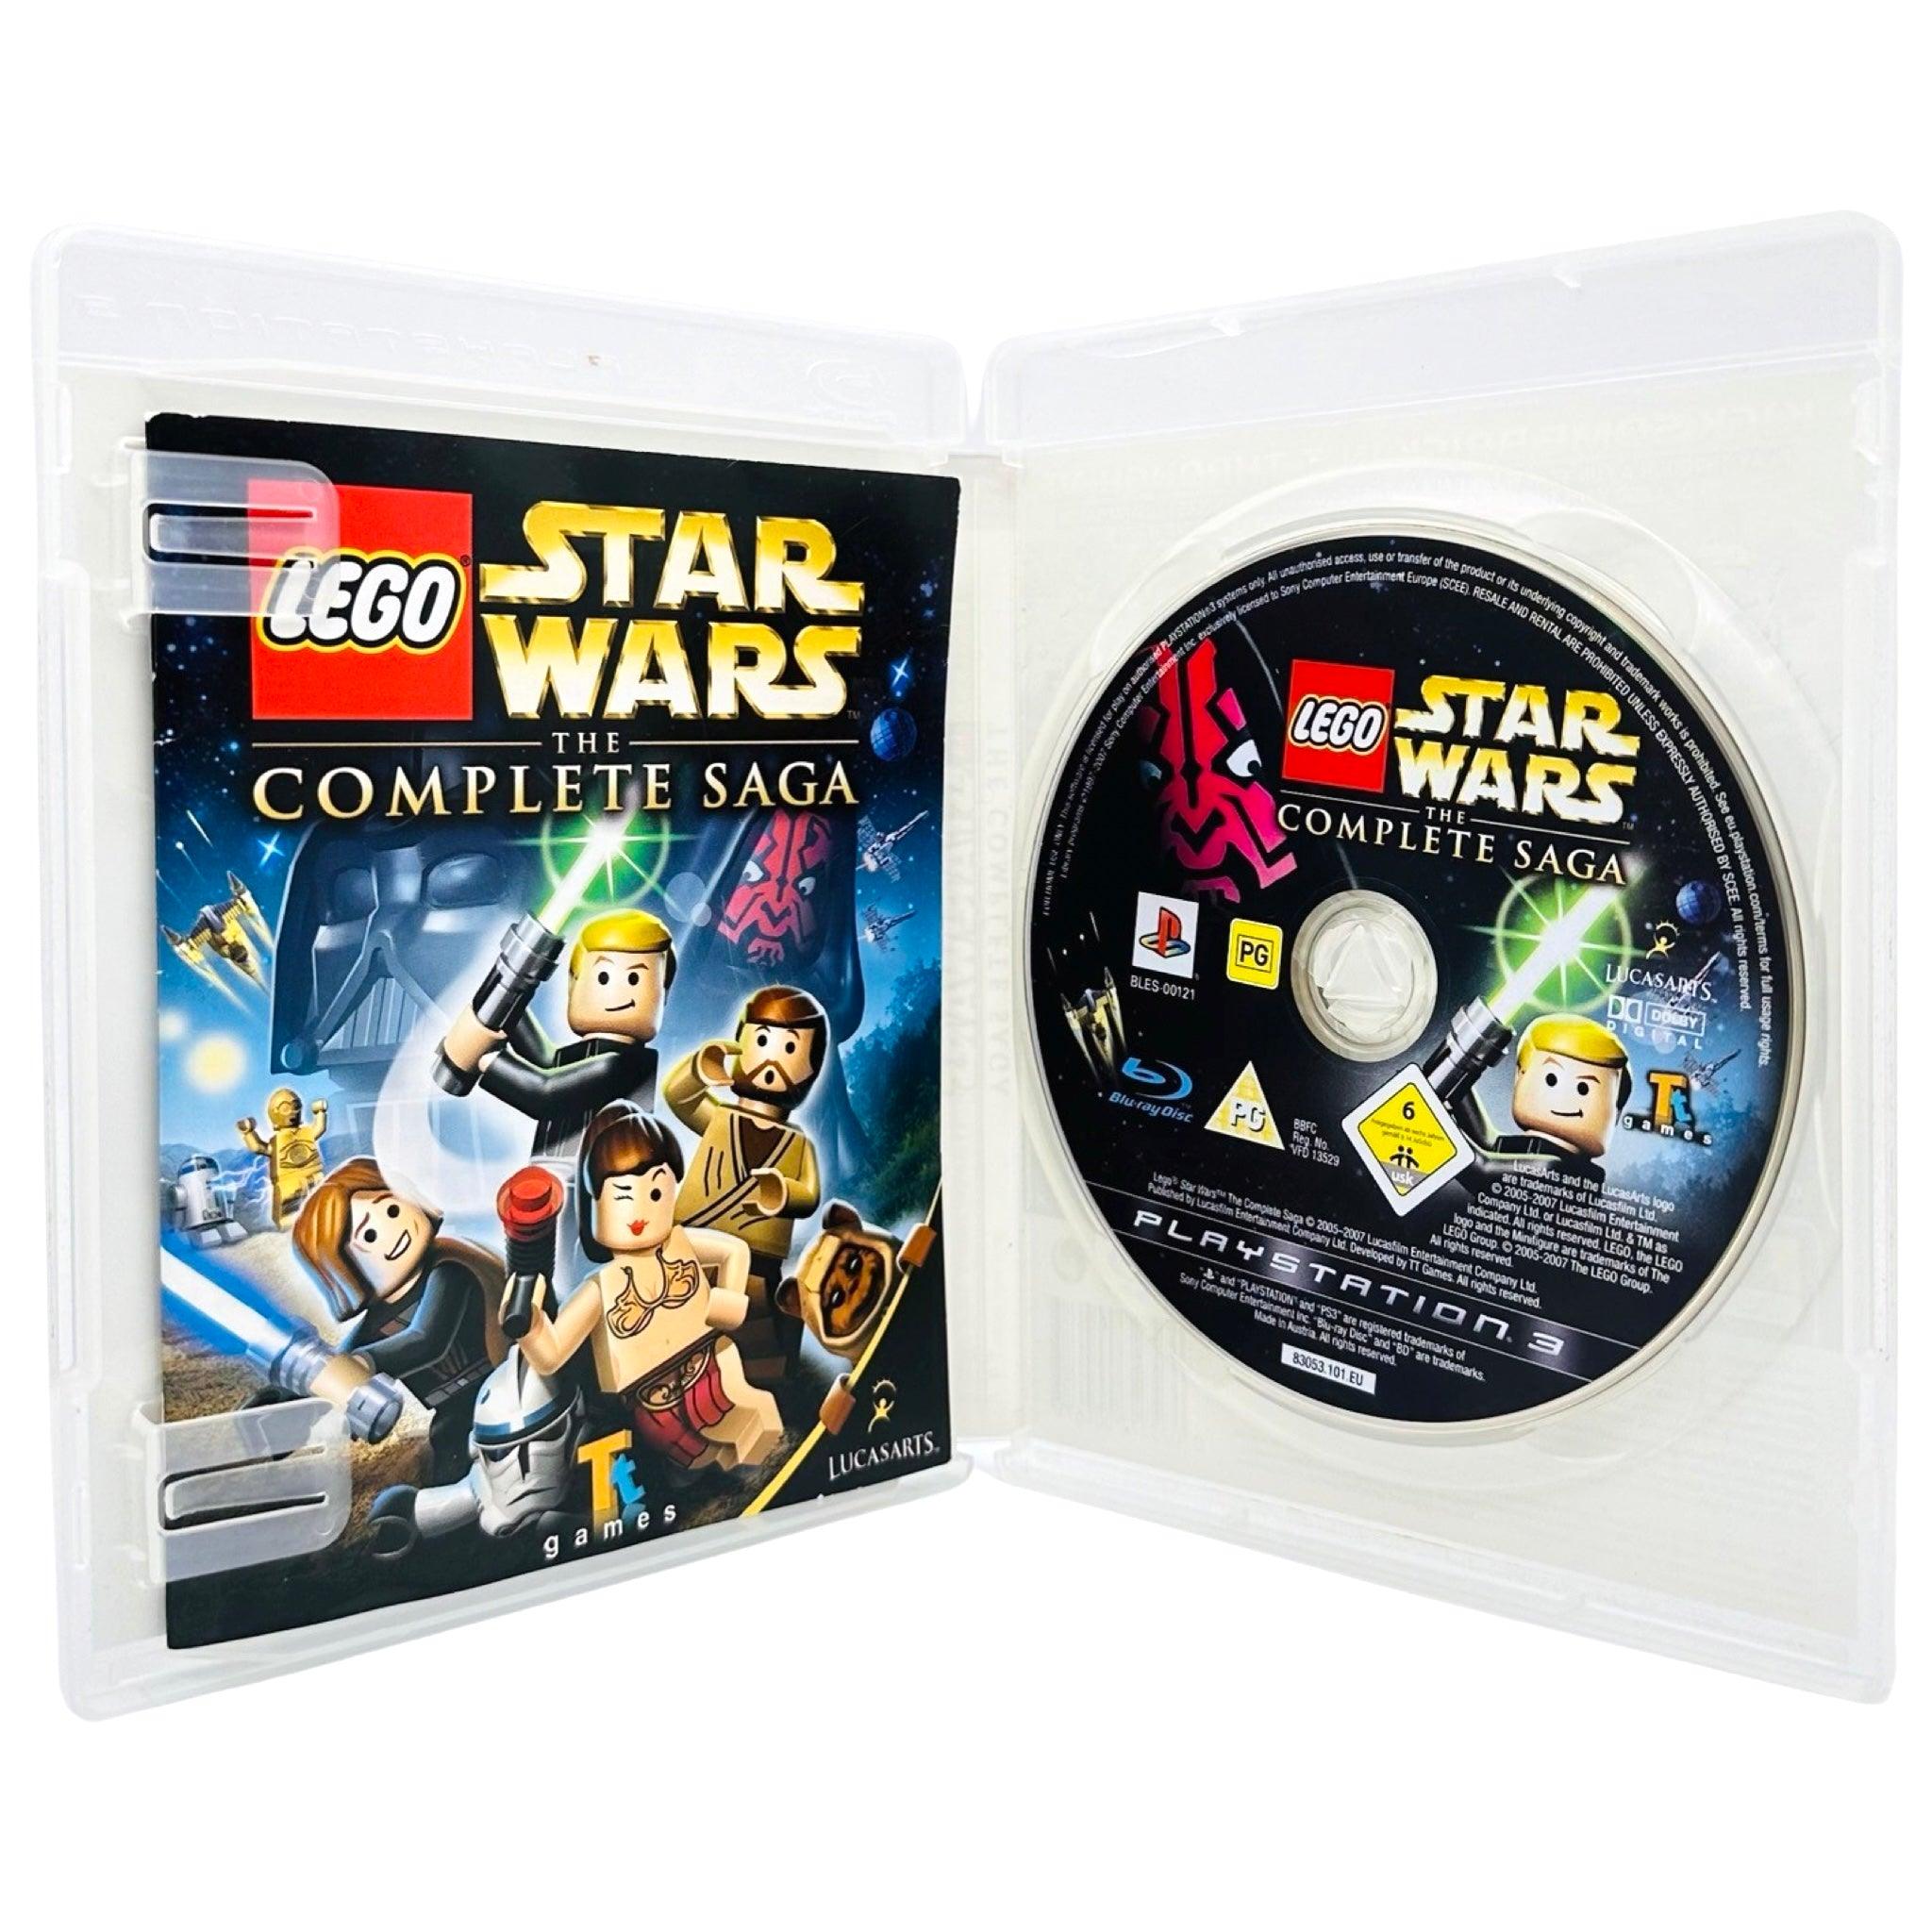 PS3: LEGO Star Wars Complete Saga - RetroGaming.no